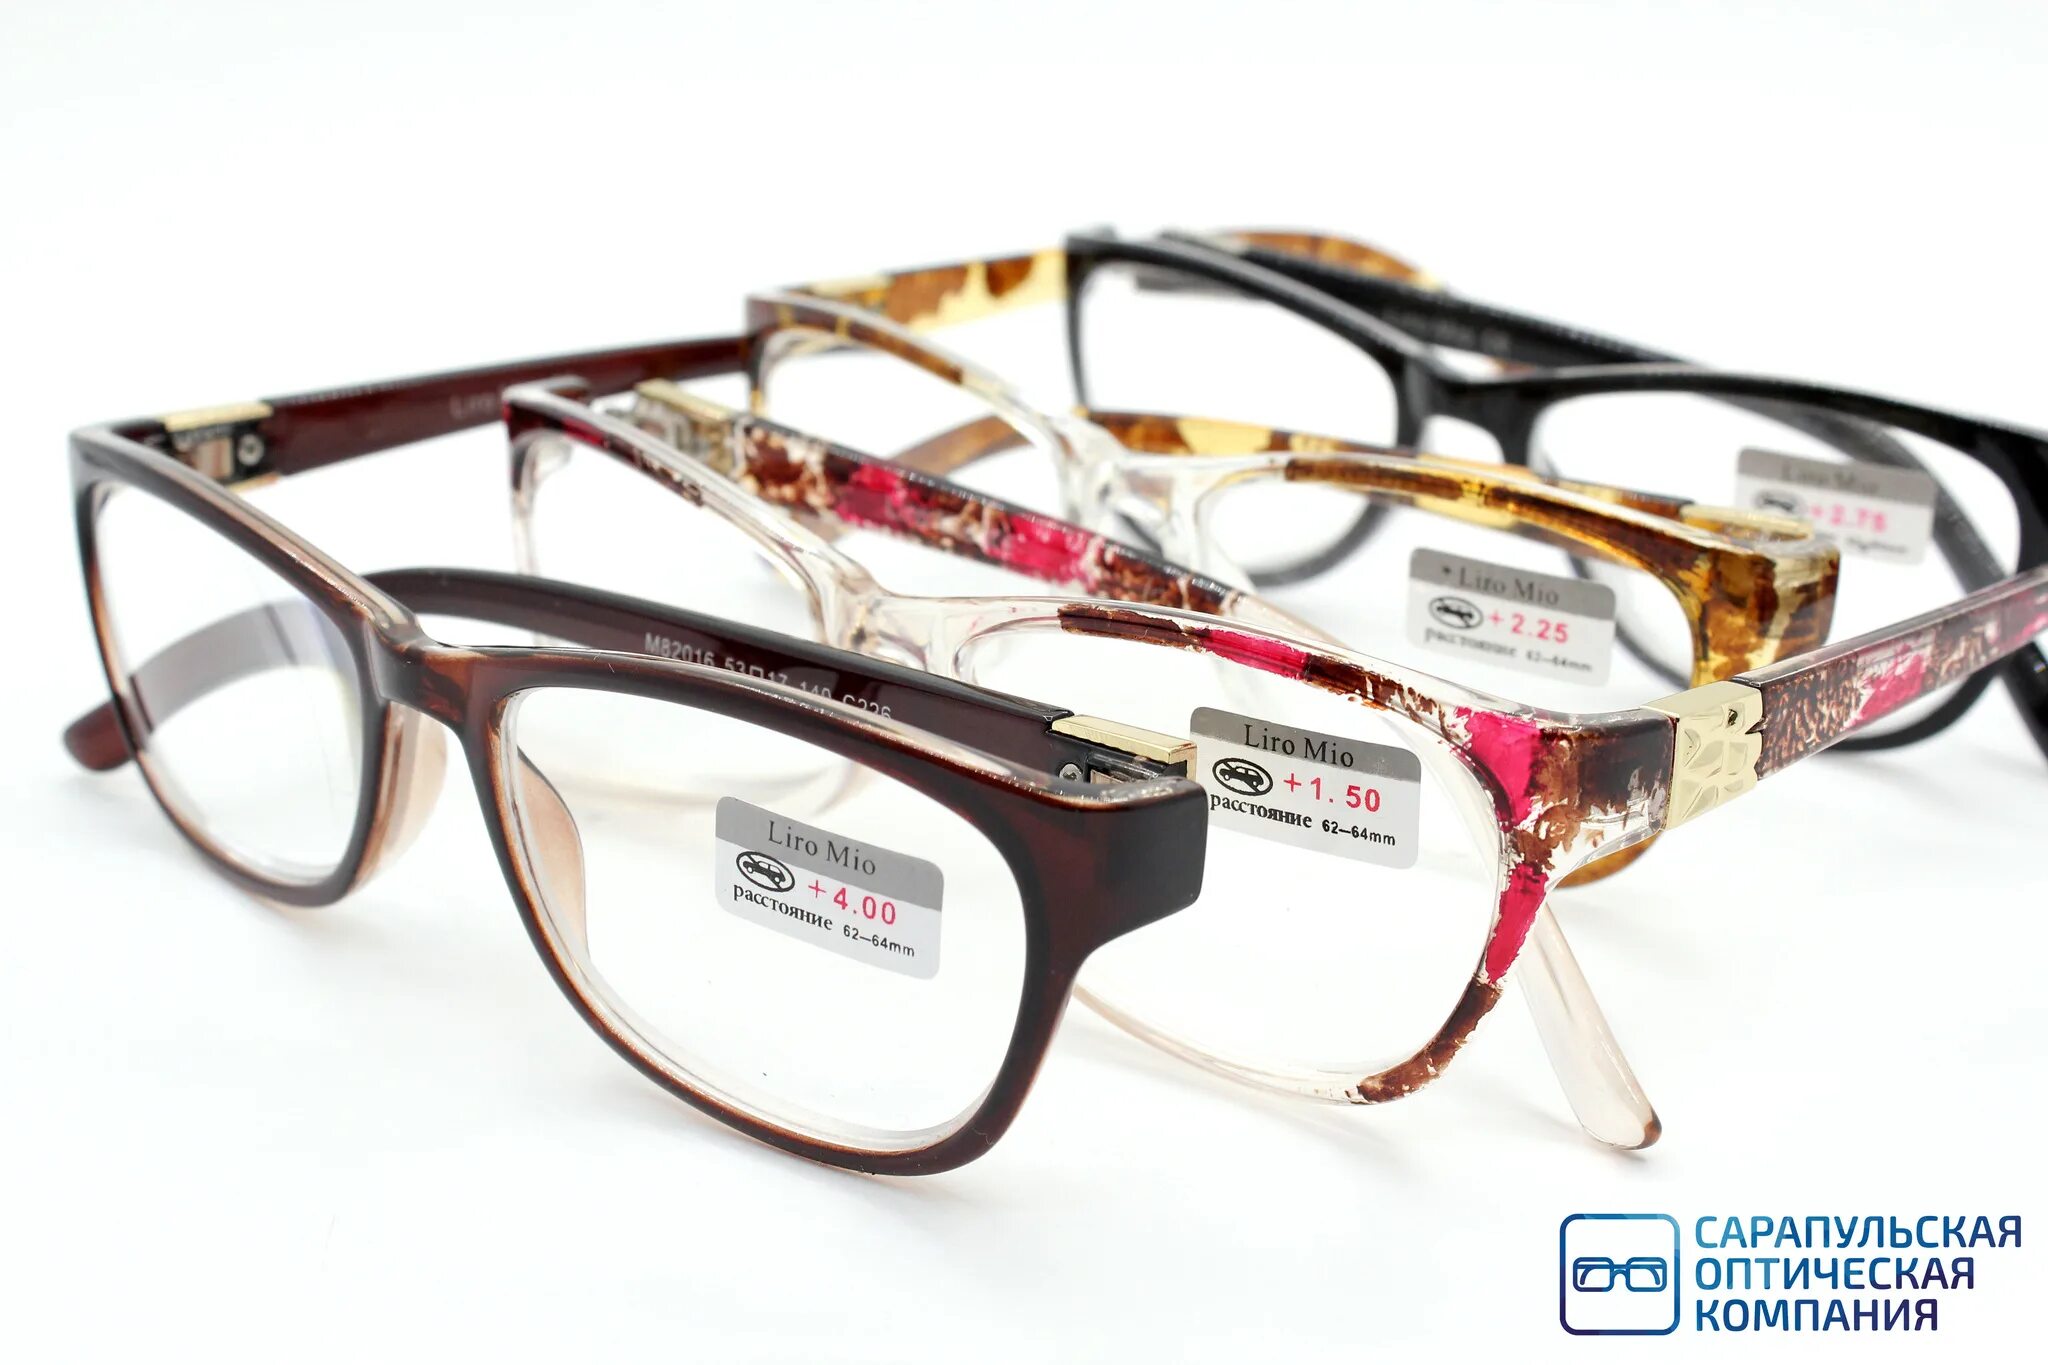 Оправа Liro mio. Оптика очки. Оптические очки. Очки готовые.